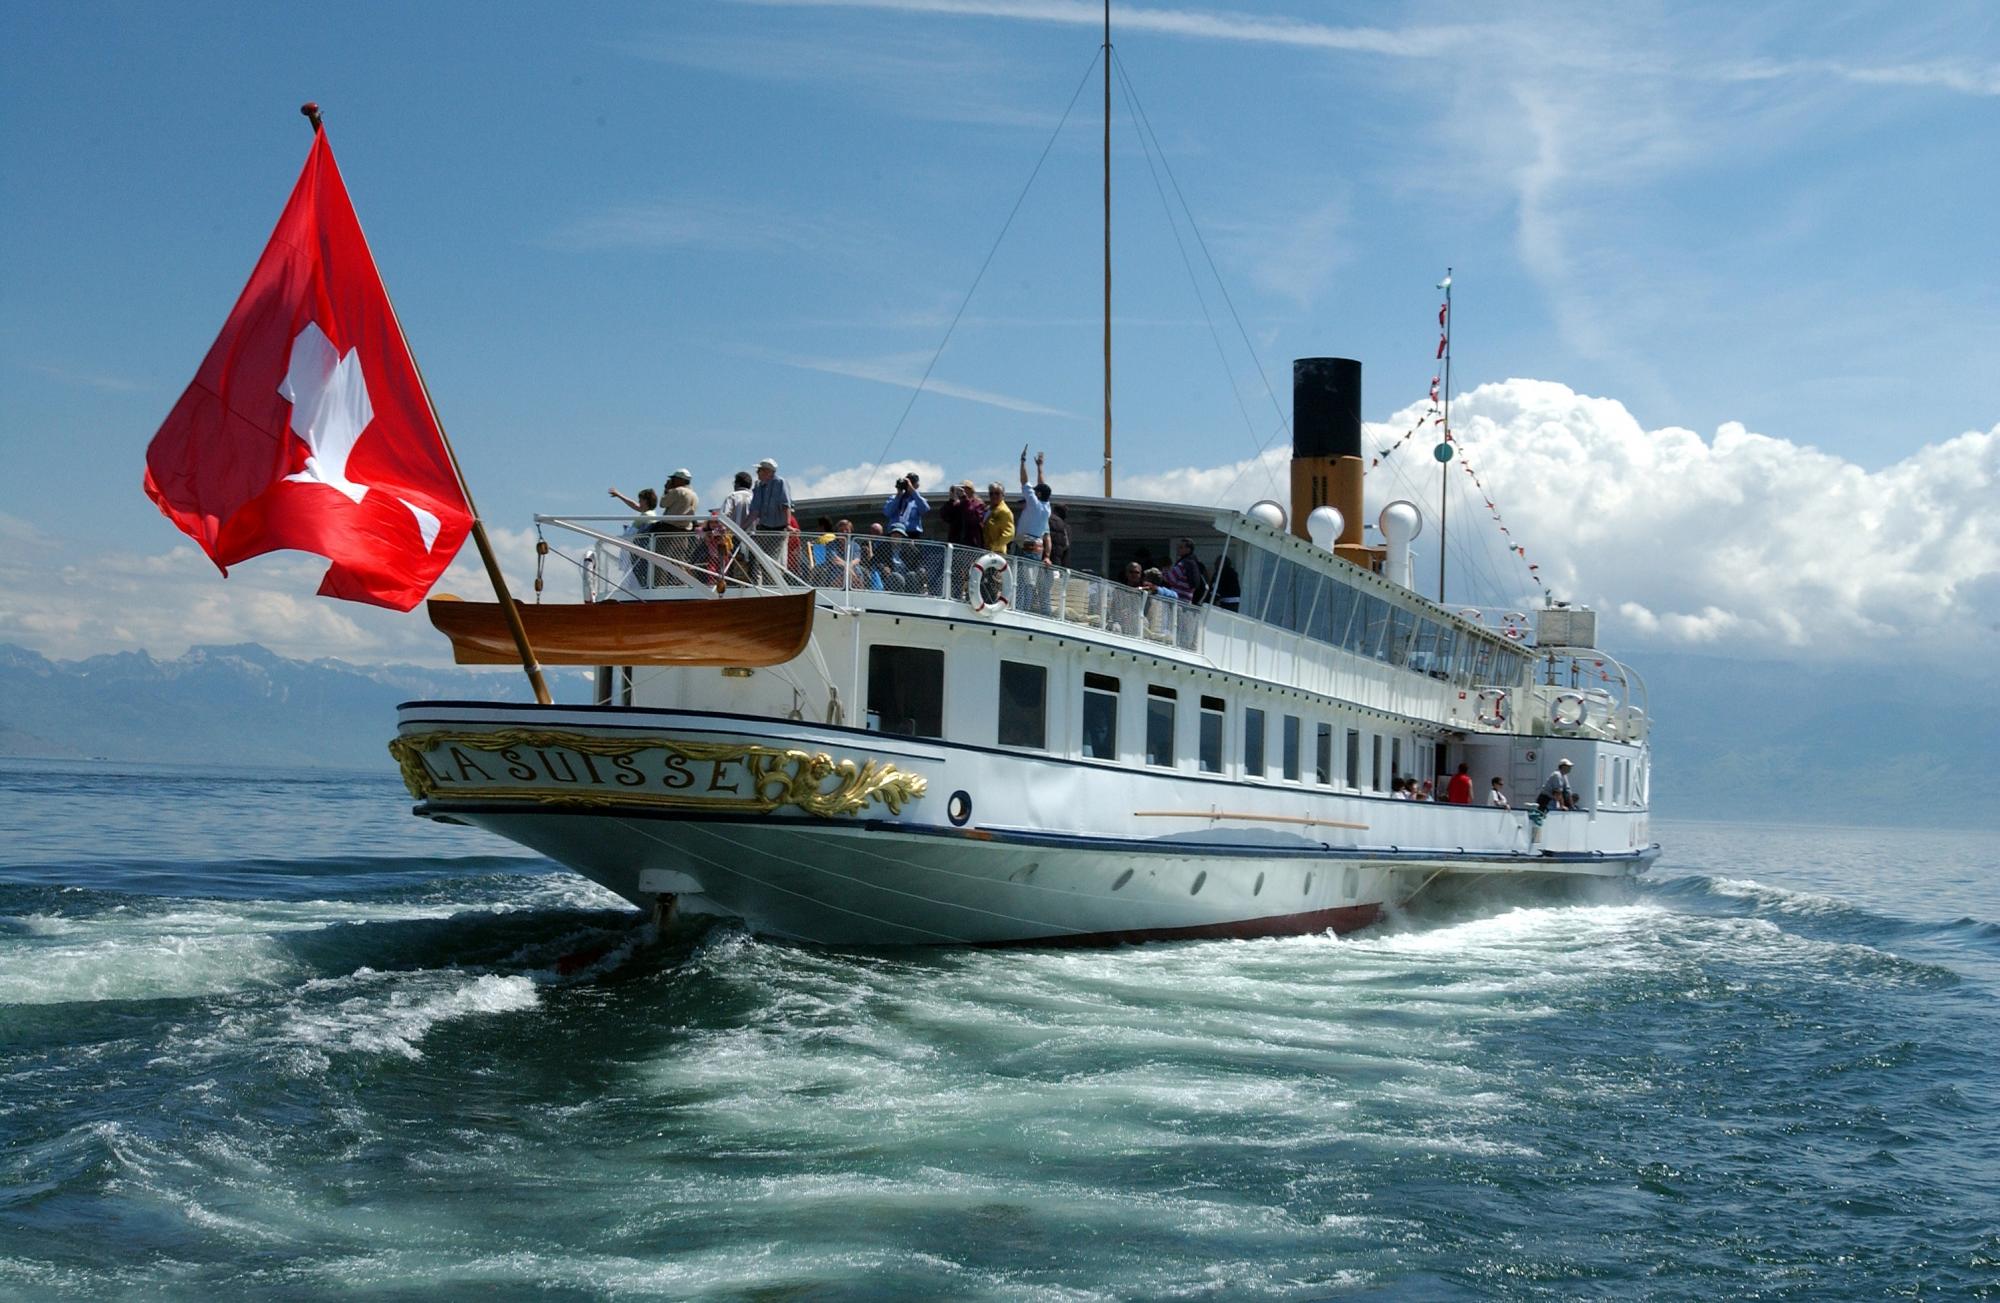 Belle Epoque Cruise on Lake Geneva